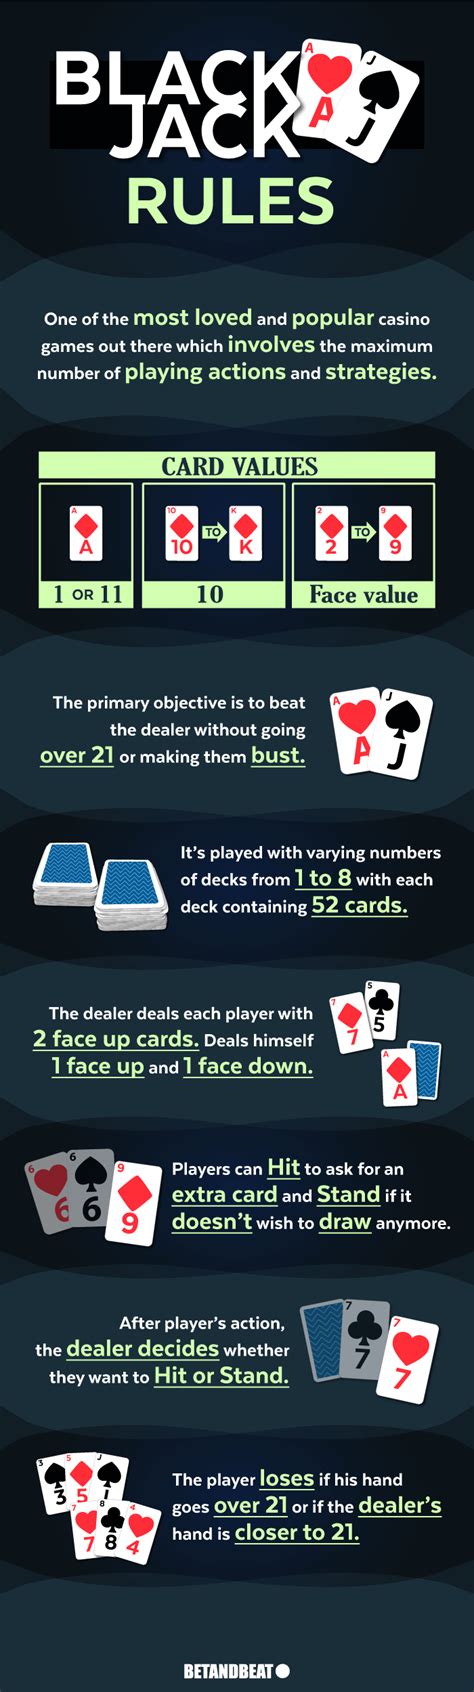 blackjack rules deck of cards rdwl